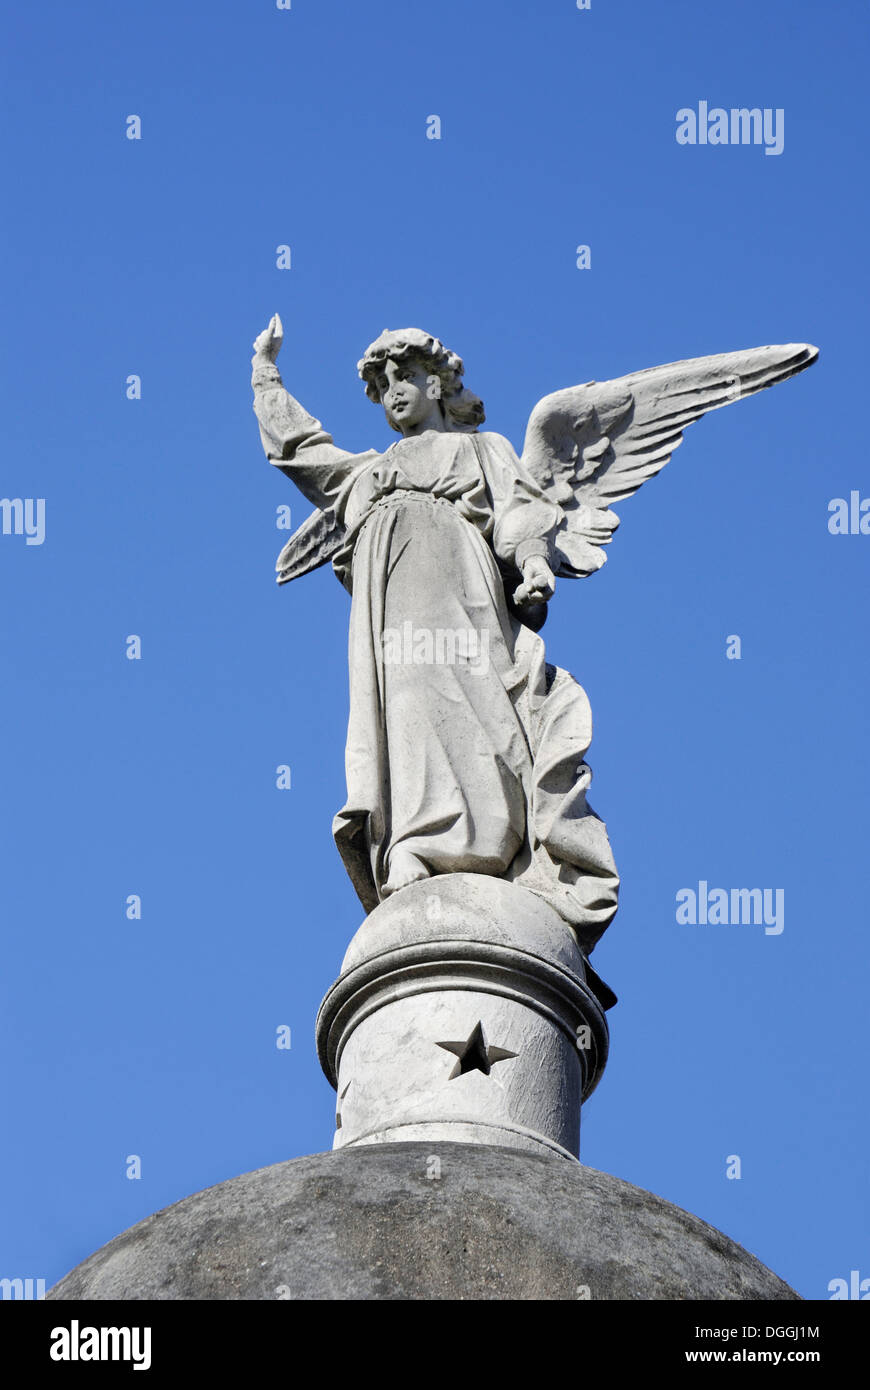 Angel on top of a mausoleum, Cementerio de la Recoleta Cemetery, Recoleta, Buenos Aires, Argentina, South America Stock Photo